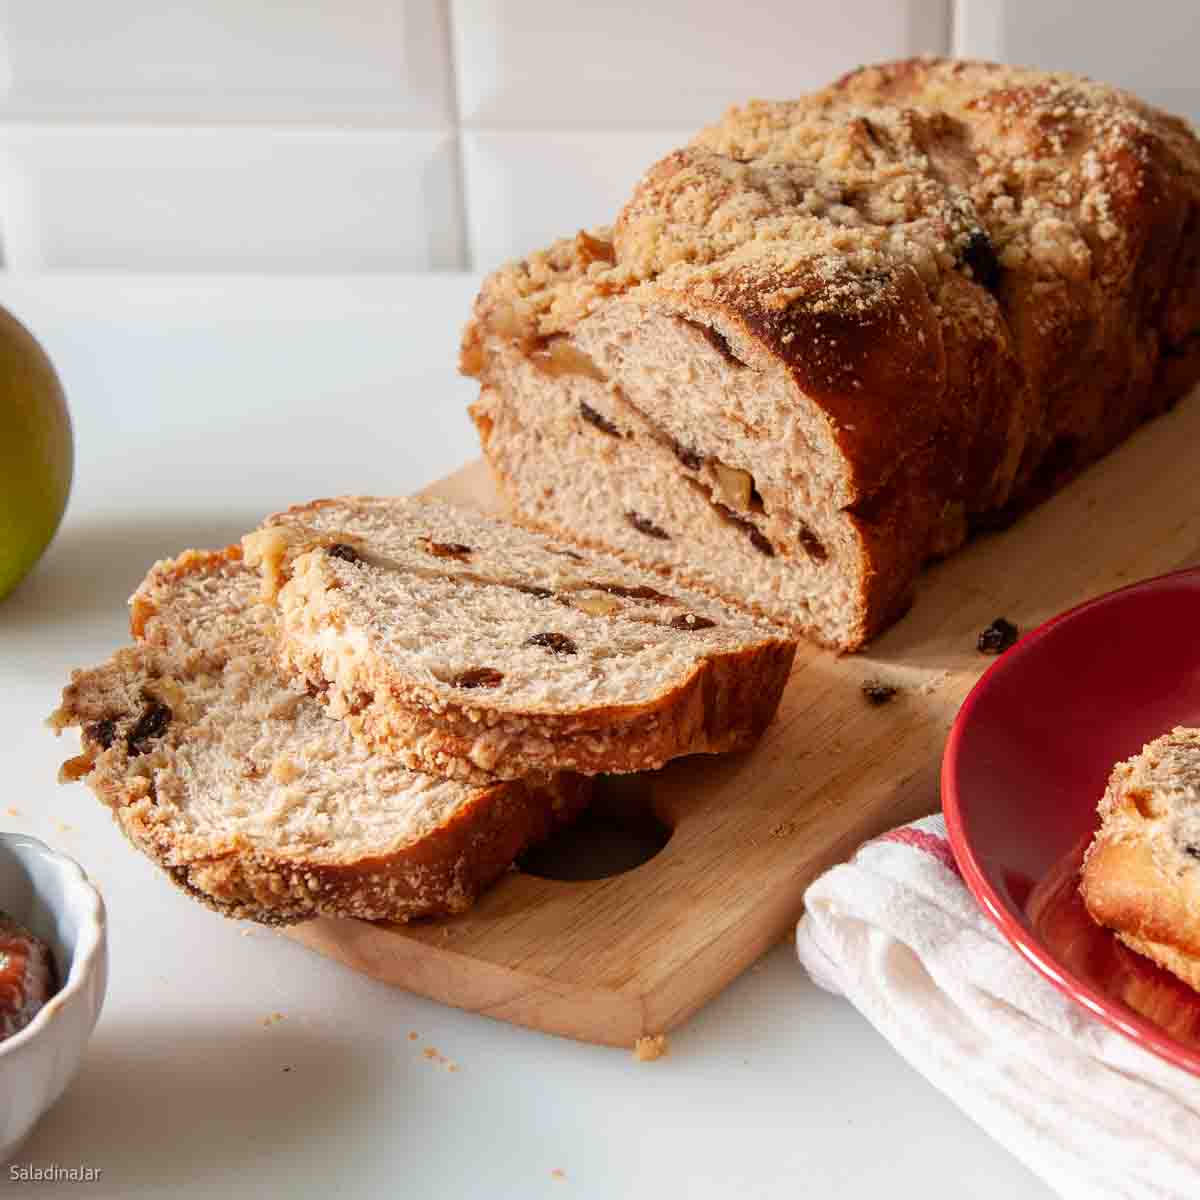 KitchenAid Mixer - Three Ups and Downs - Christina's Bread Bakes